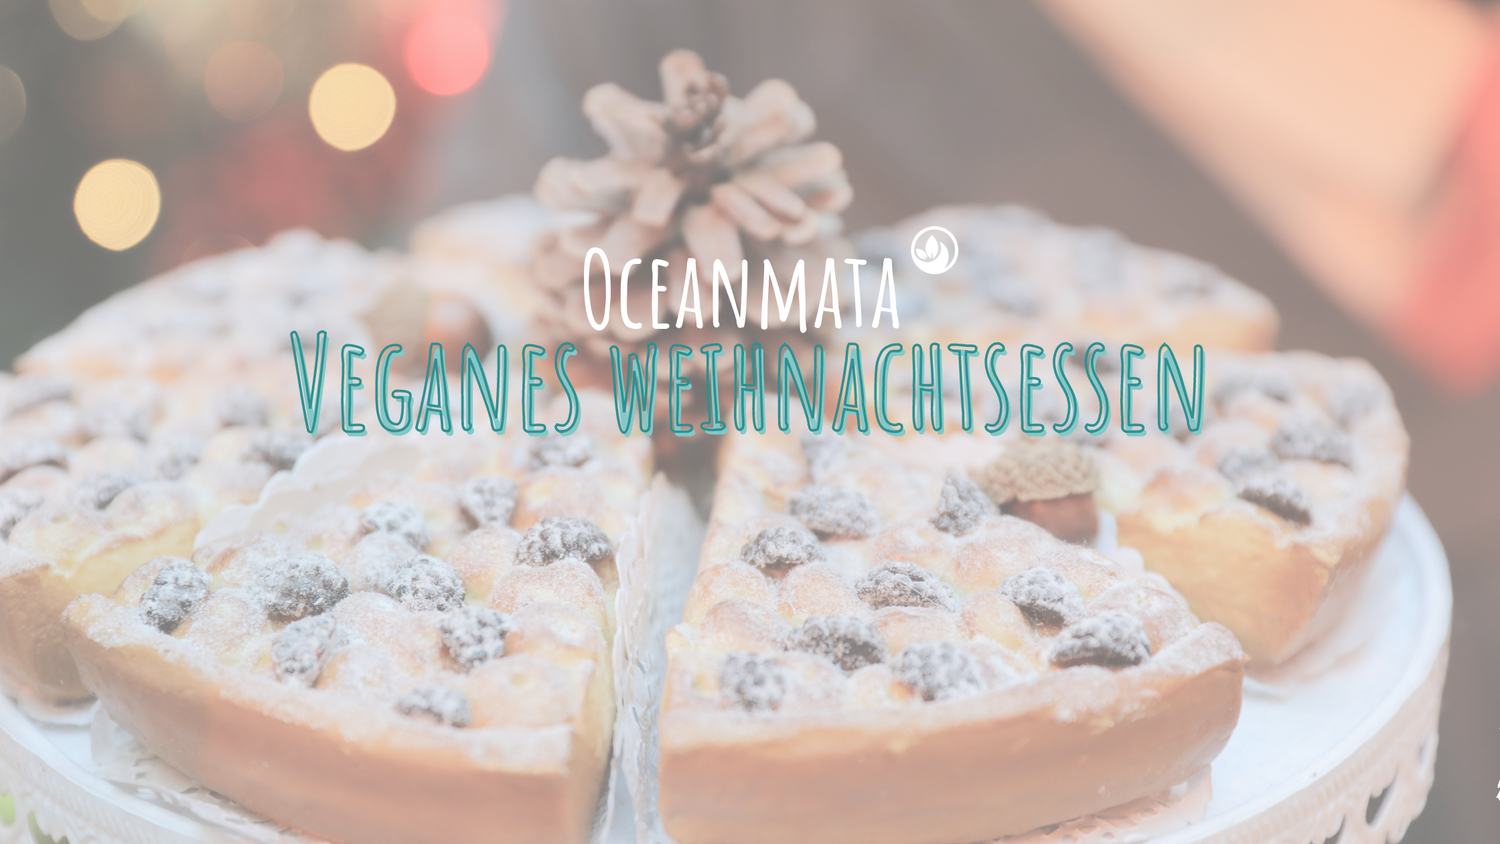 Veganes Weihnachtsessen | OceanMata